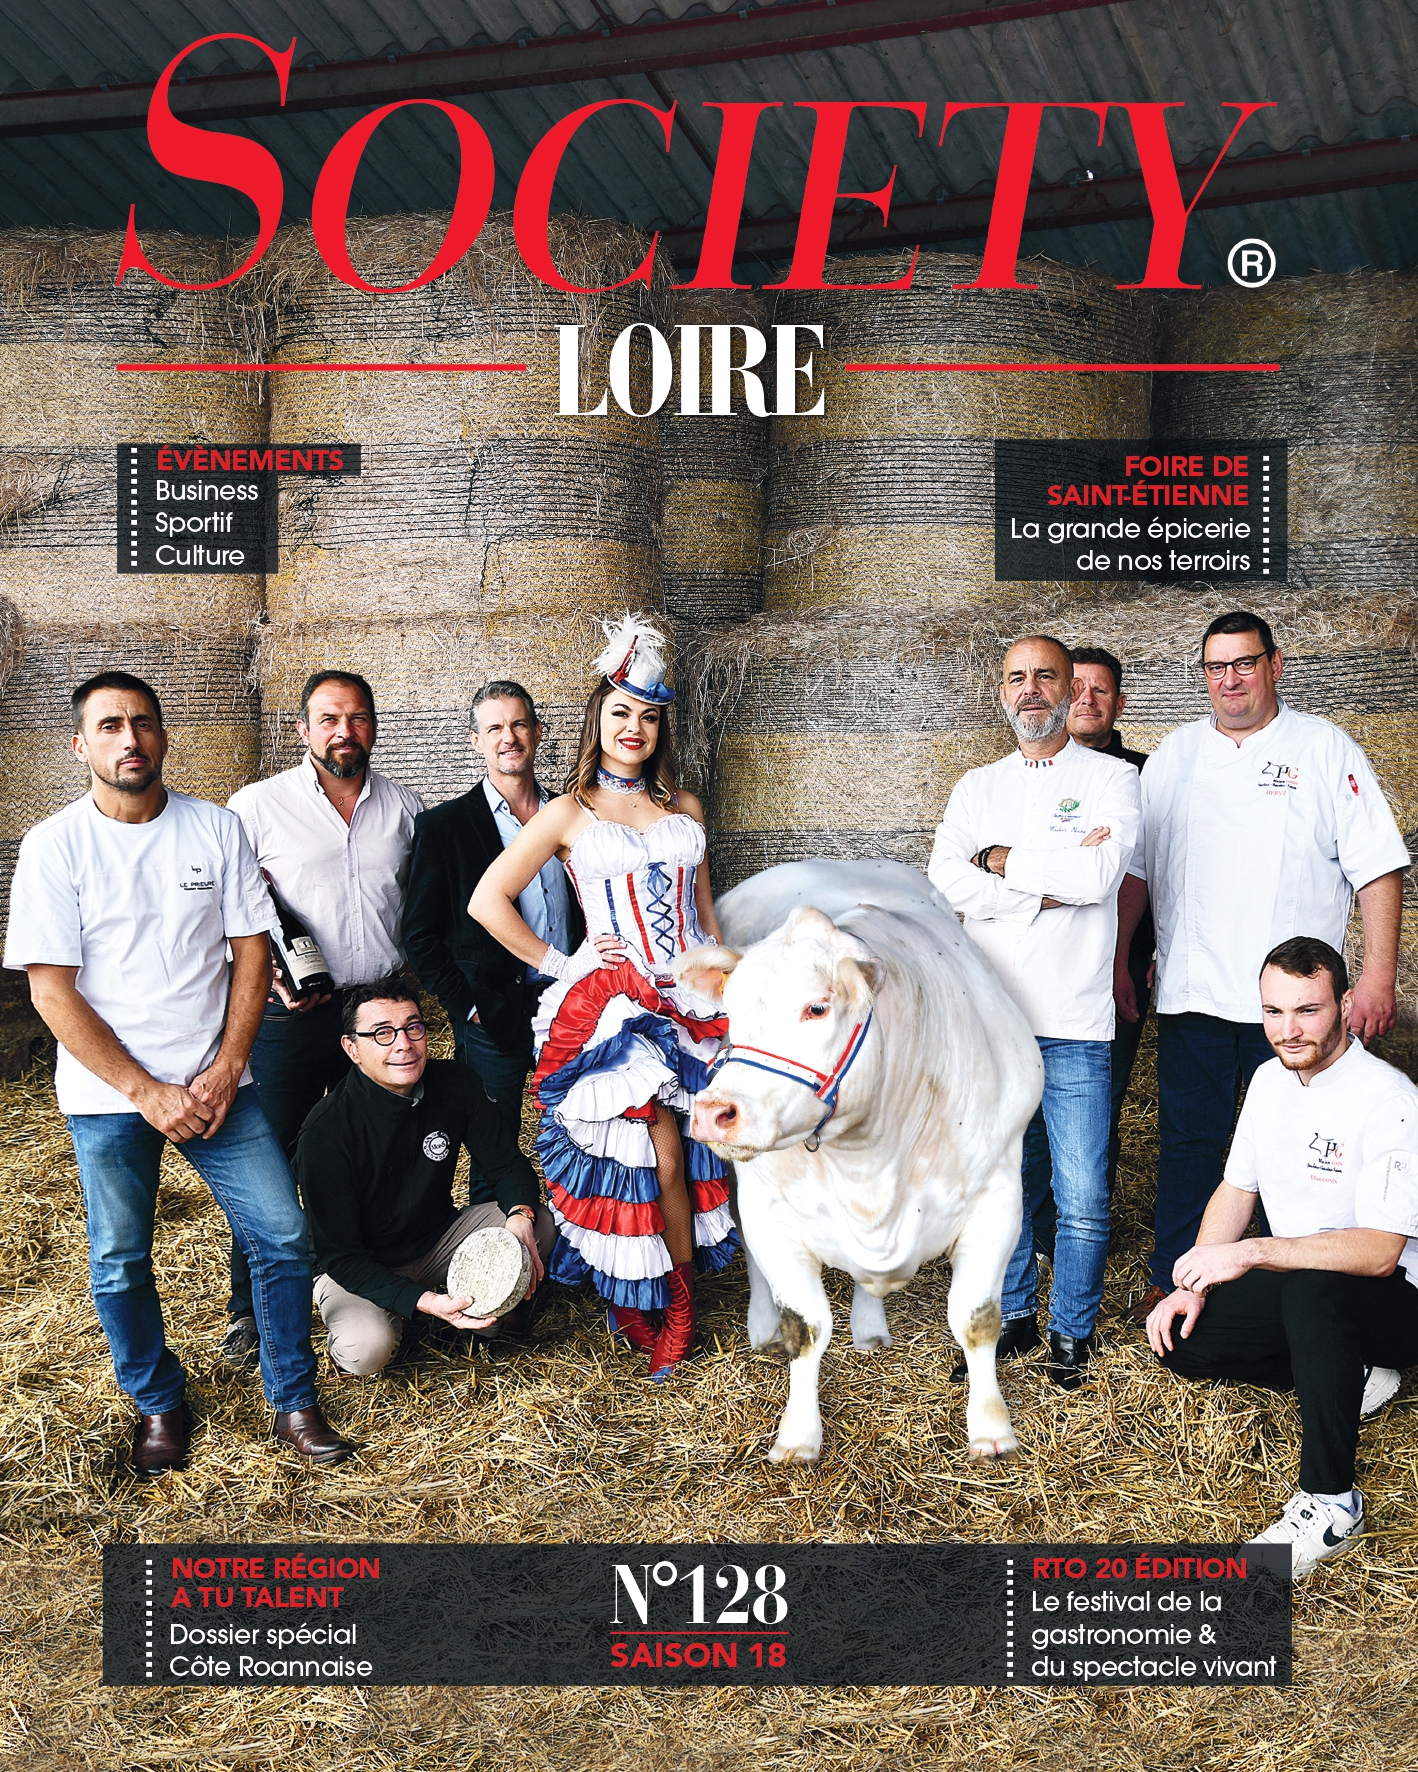 Magazine Society Loire N°128